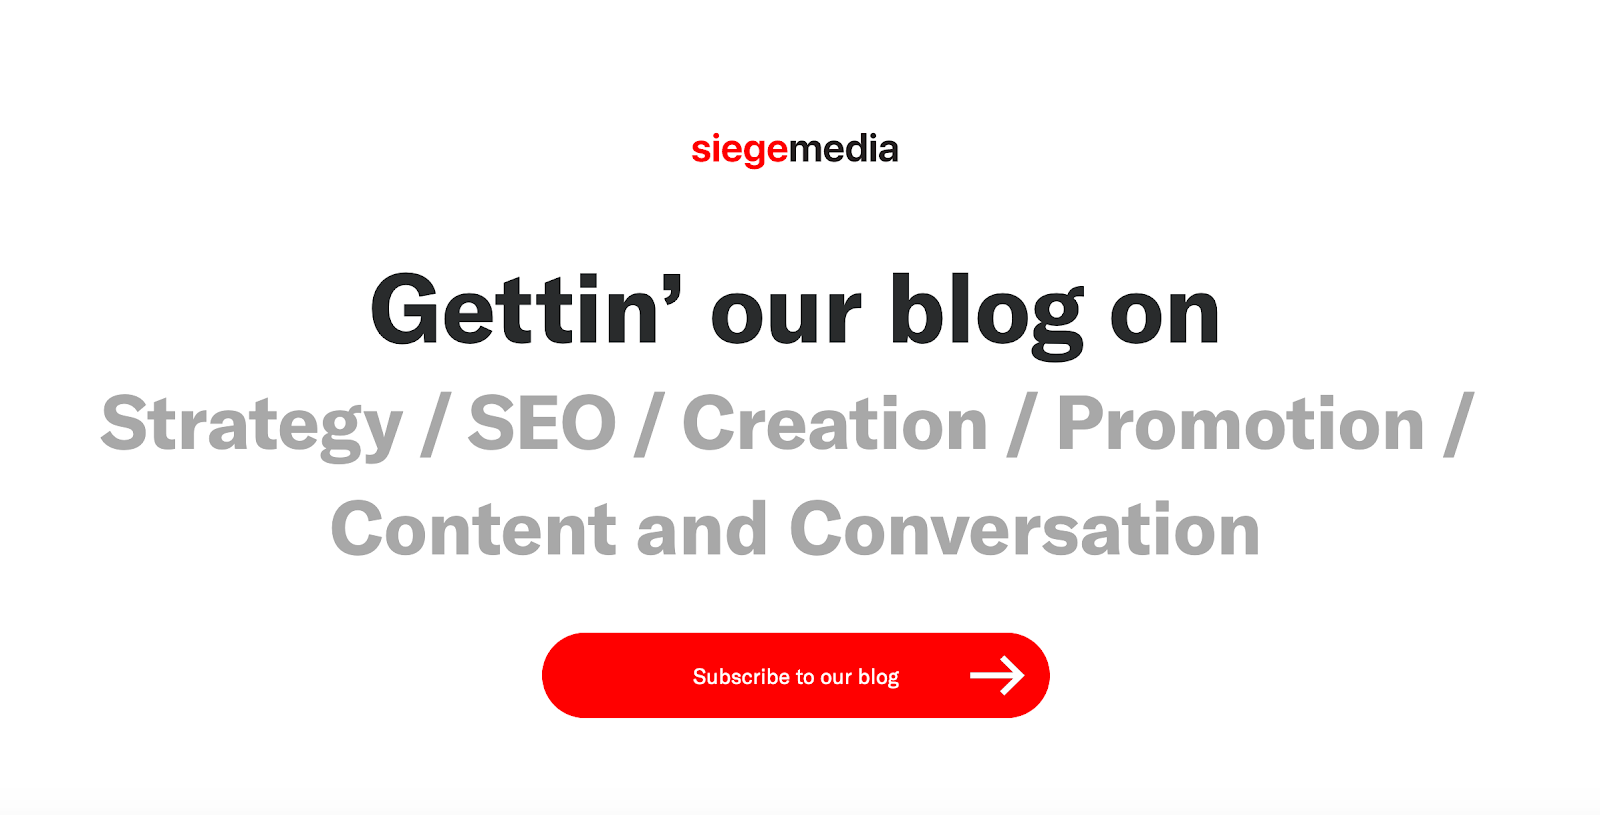 Siege Media's marketing content blog